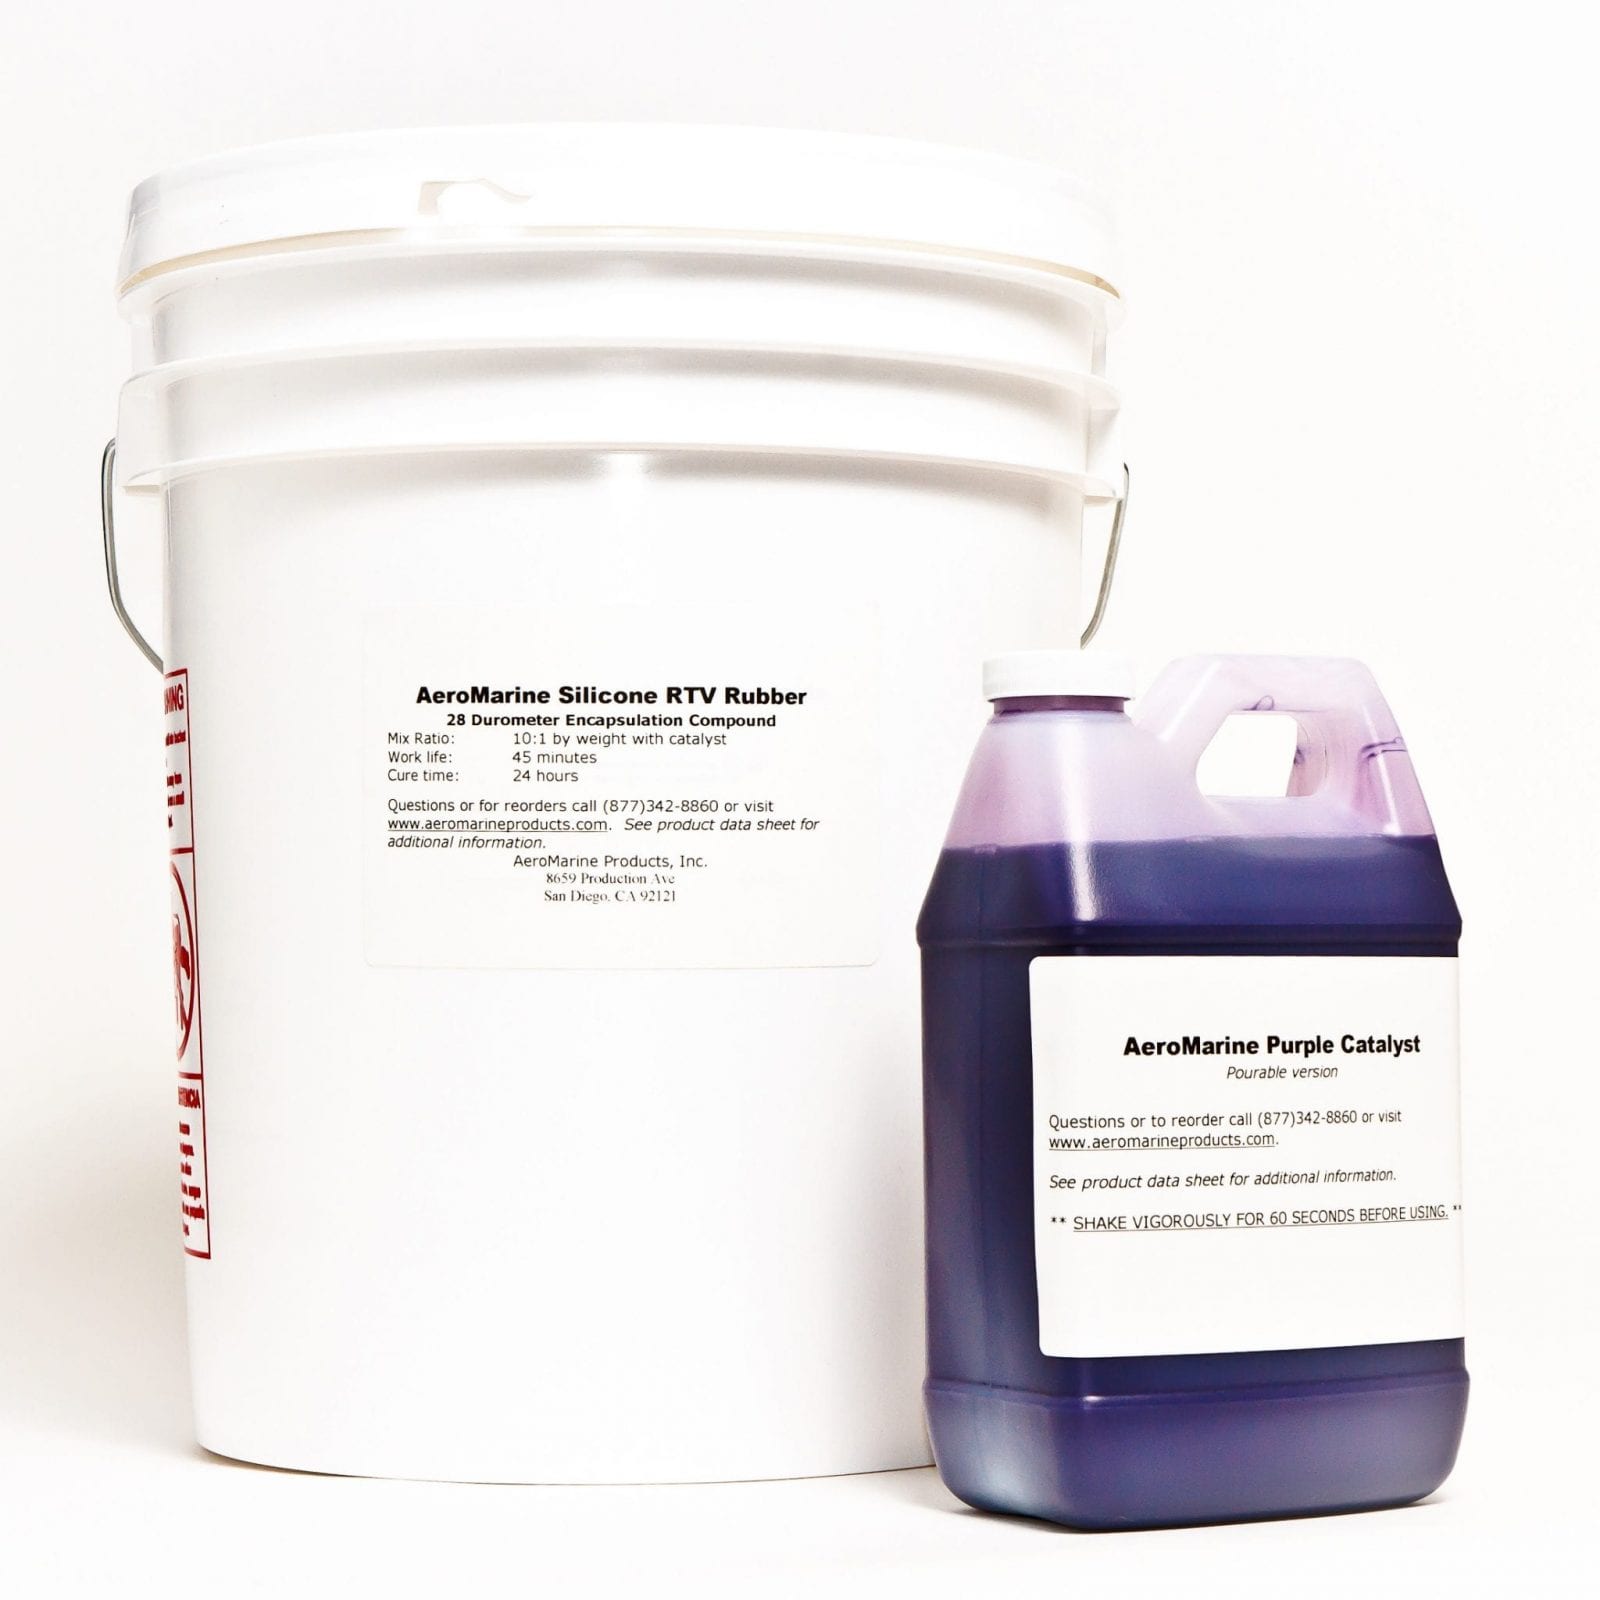 https://www.aeromarineproducts.com/wp-content/uploads/2016/02/aero-marine-products_silicone-rtv-rubber-purple-catalyst_6gal-2.jpg